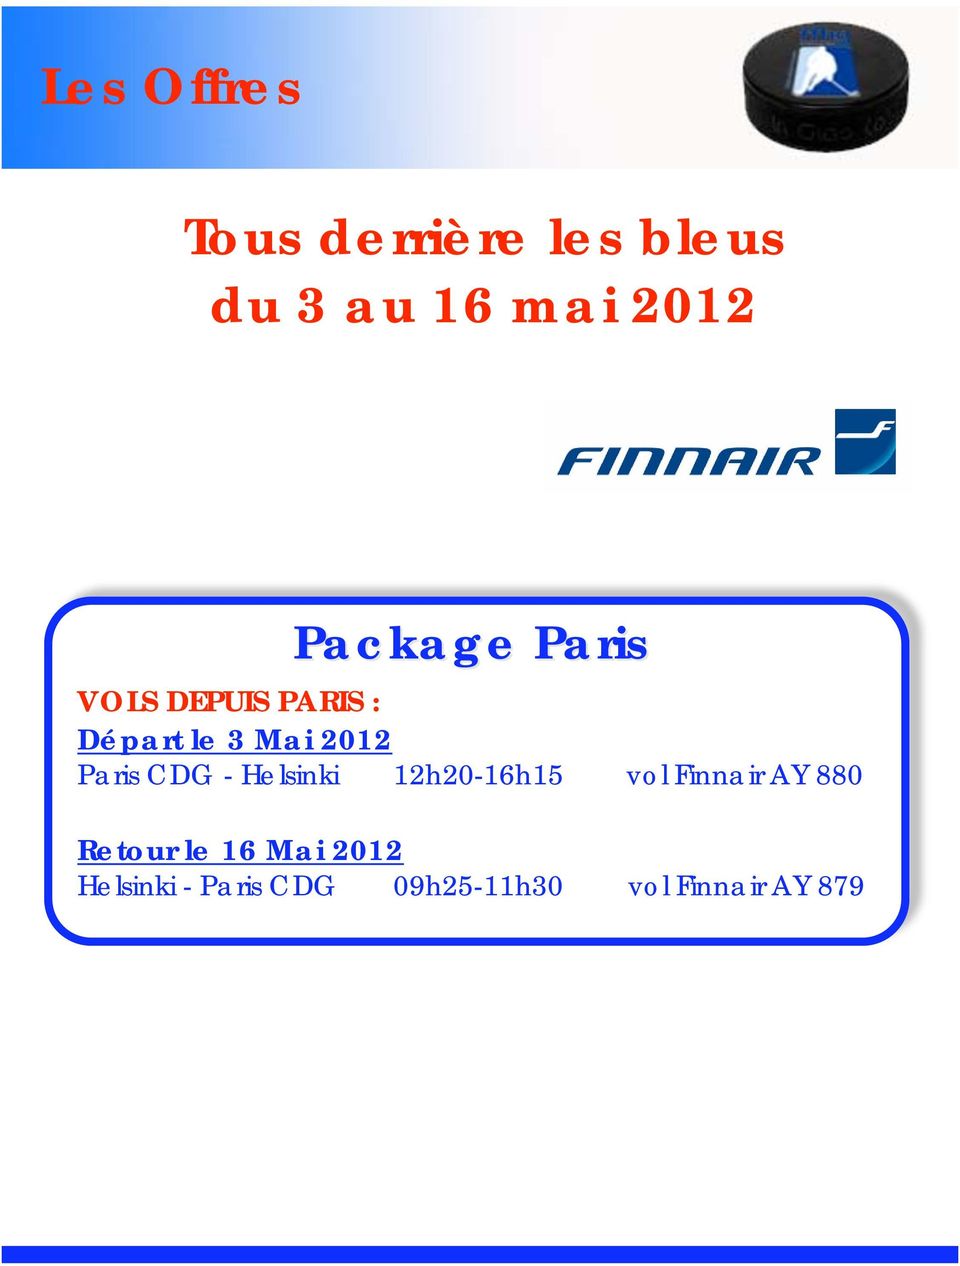 Paris CDG - Helsinki 12h20-16h15 vol Finnair AY 880 Retour